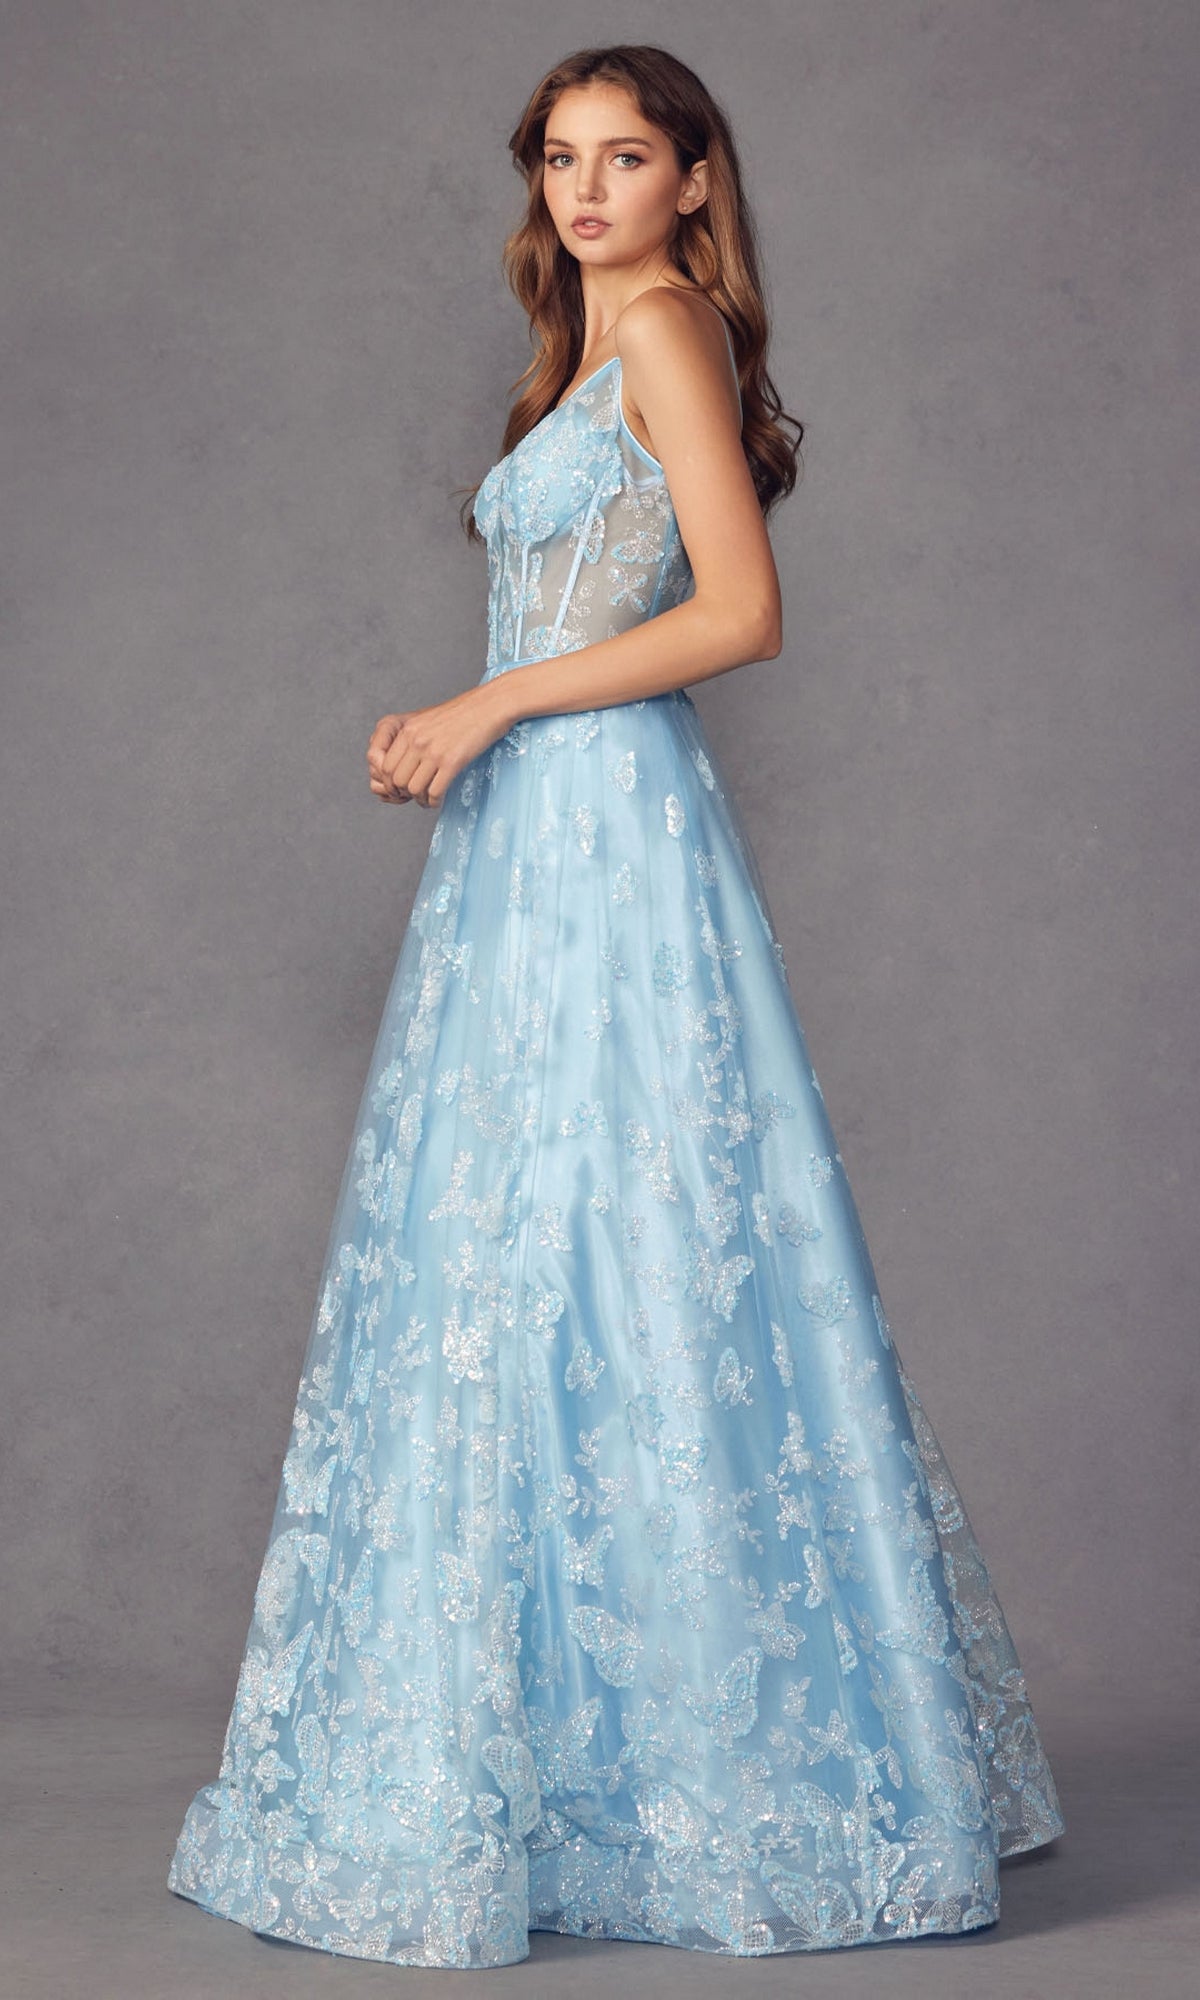 Sheer-Corset Glitter-Print Long Prom Dress 2413